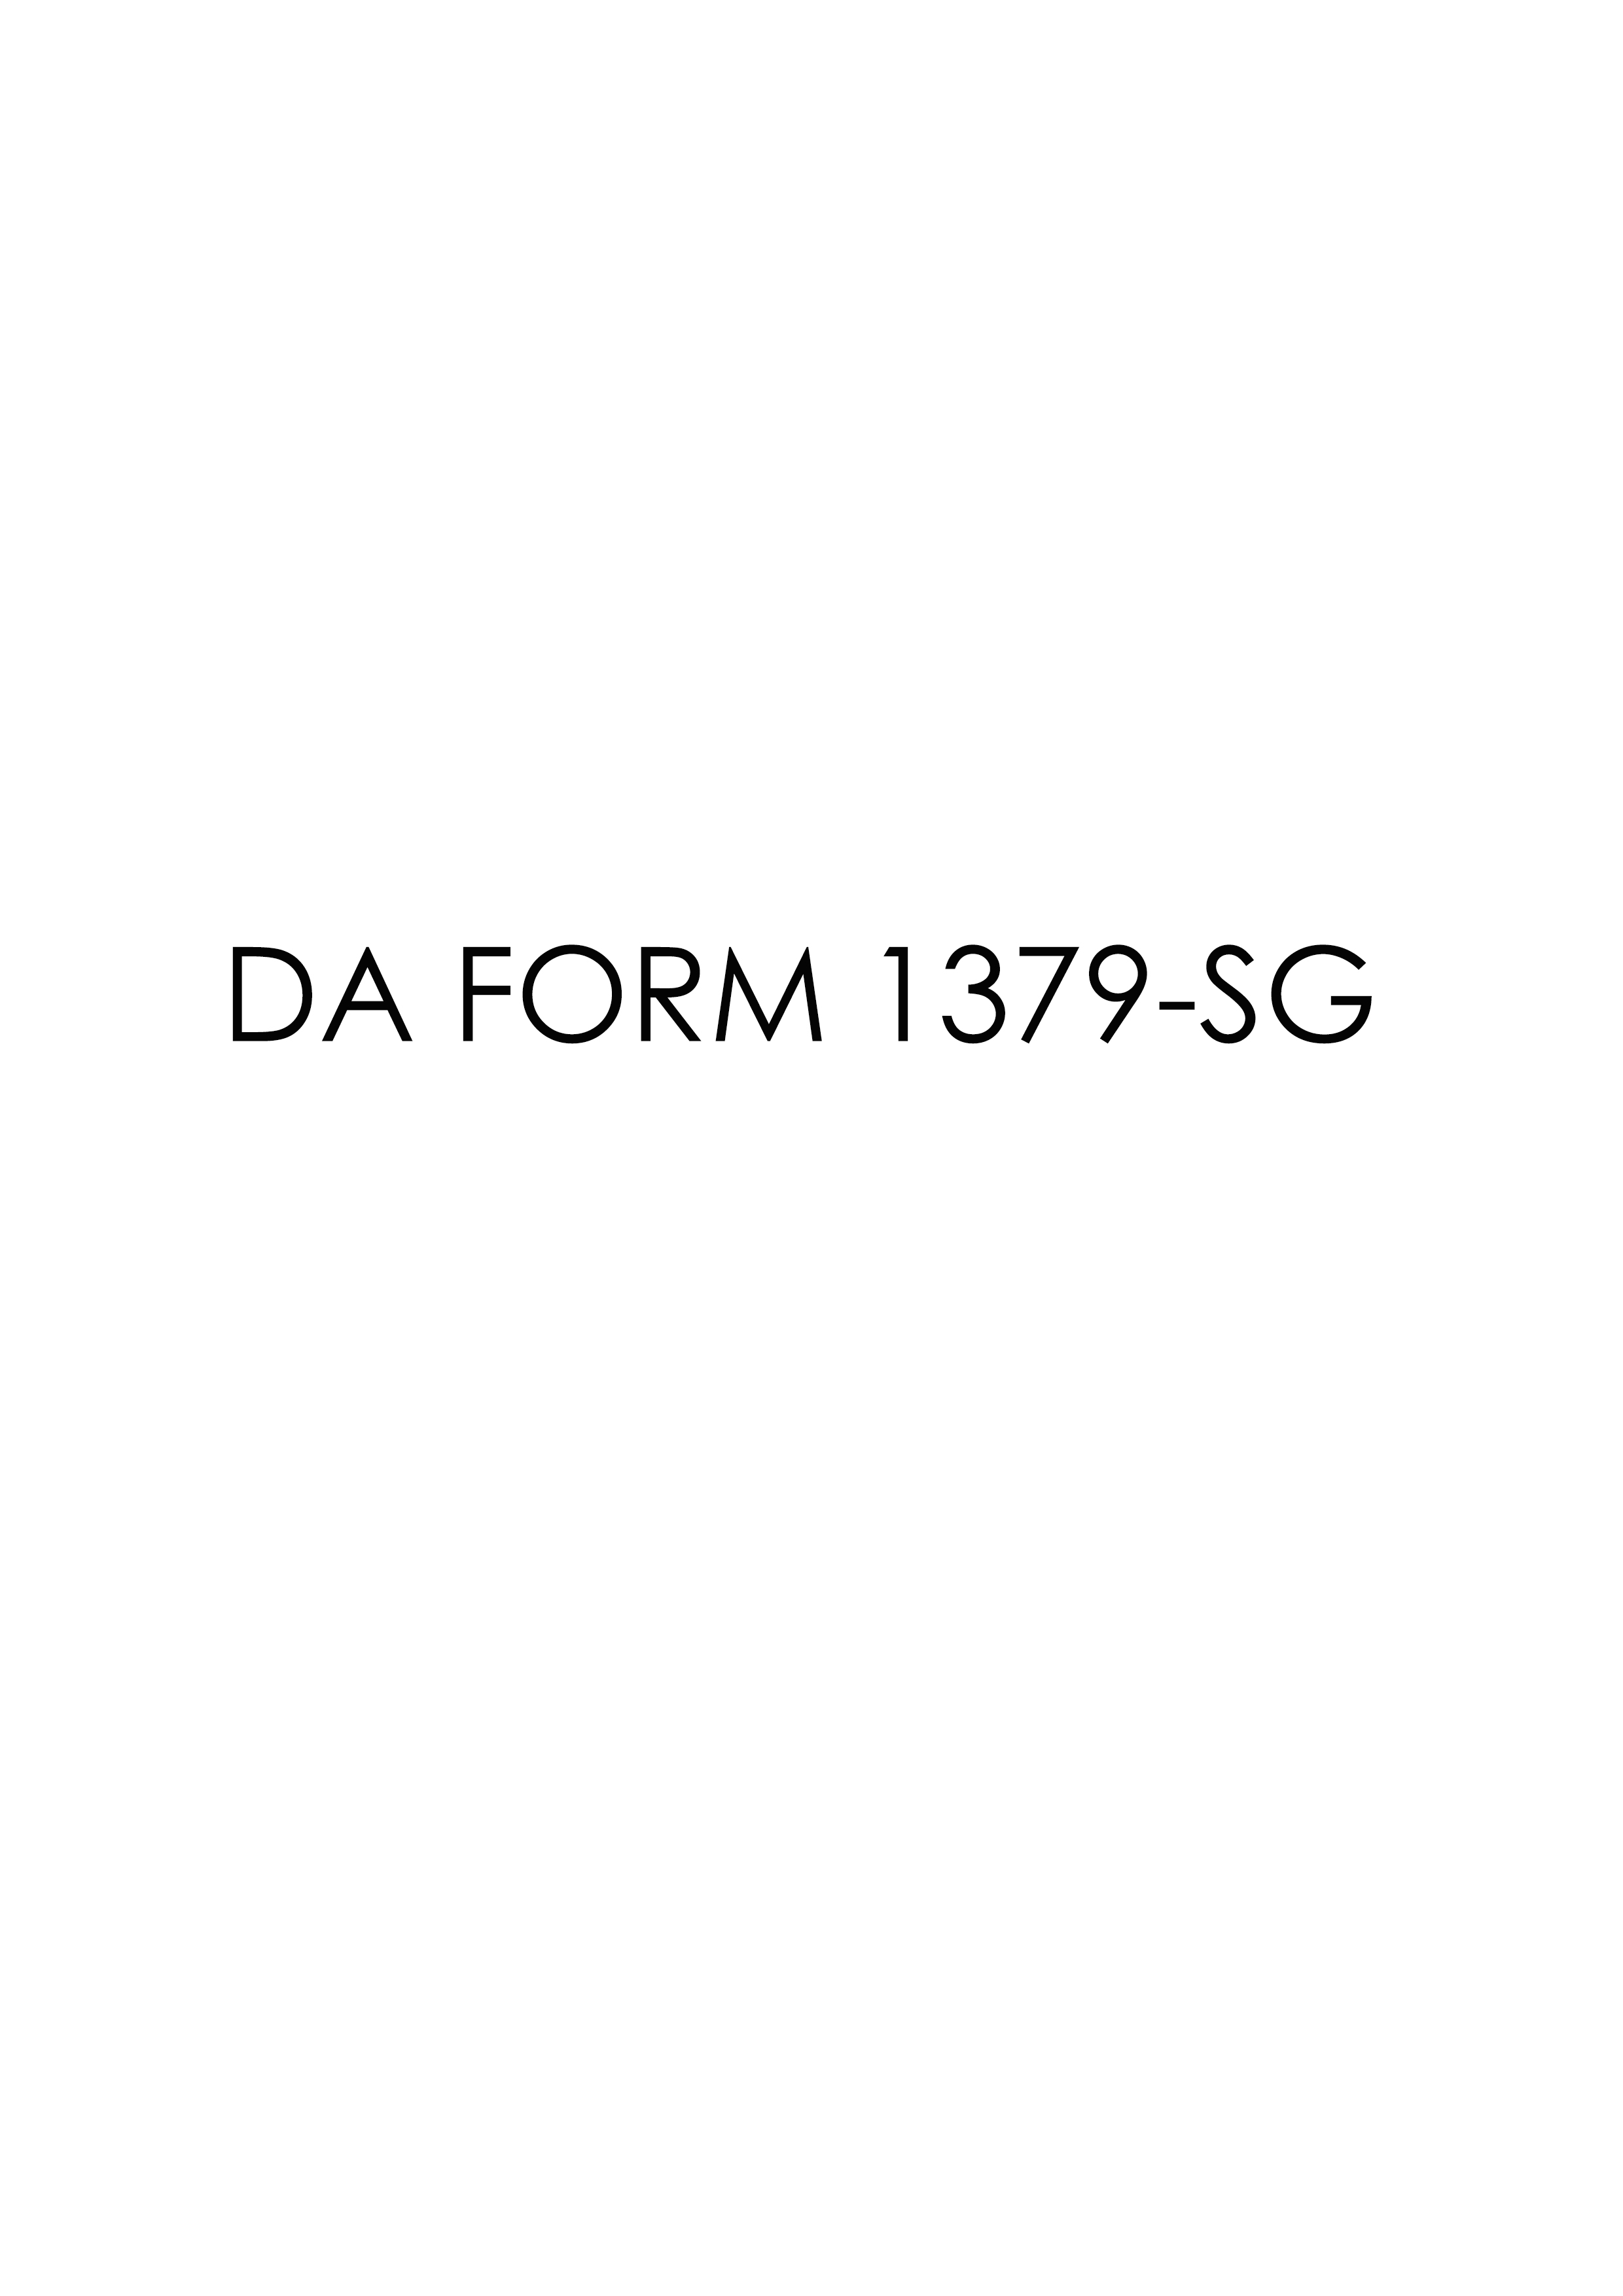 da Form 1379-SG fillable